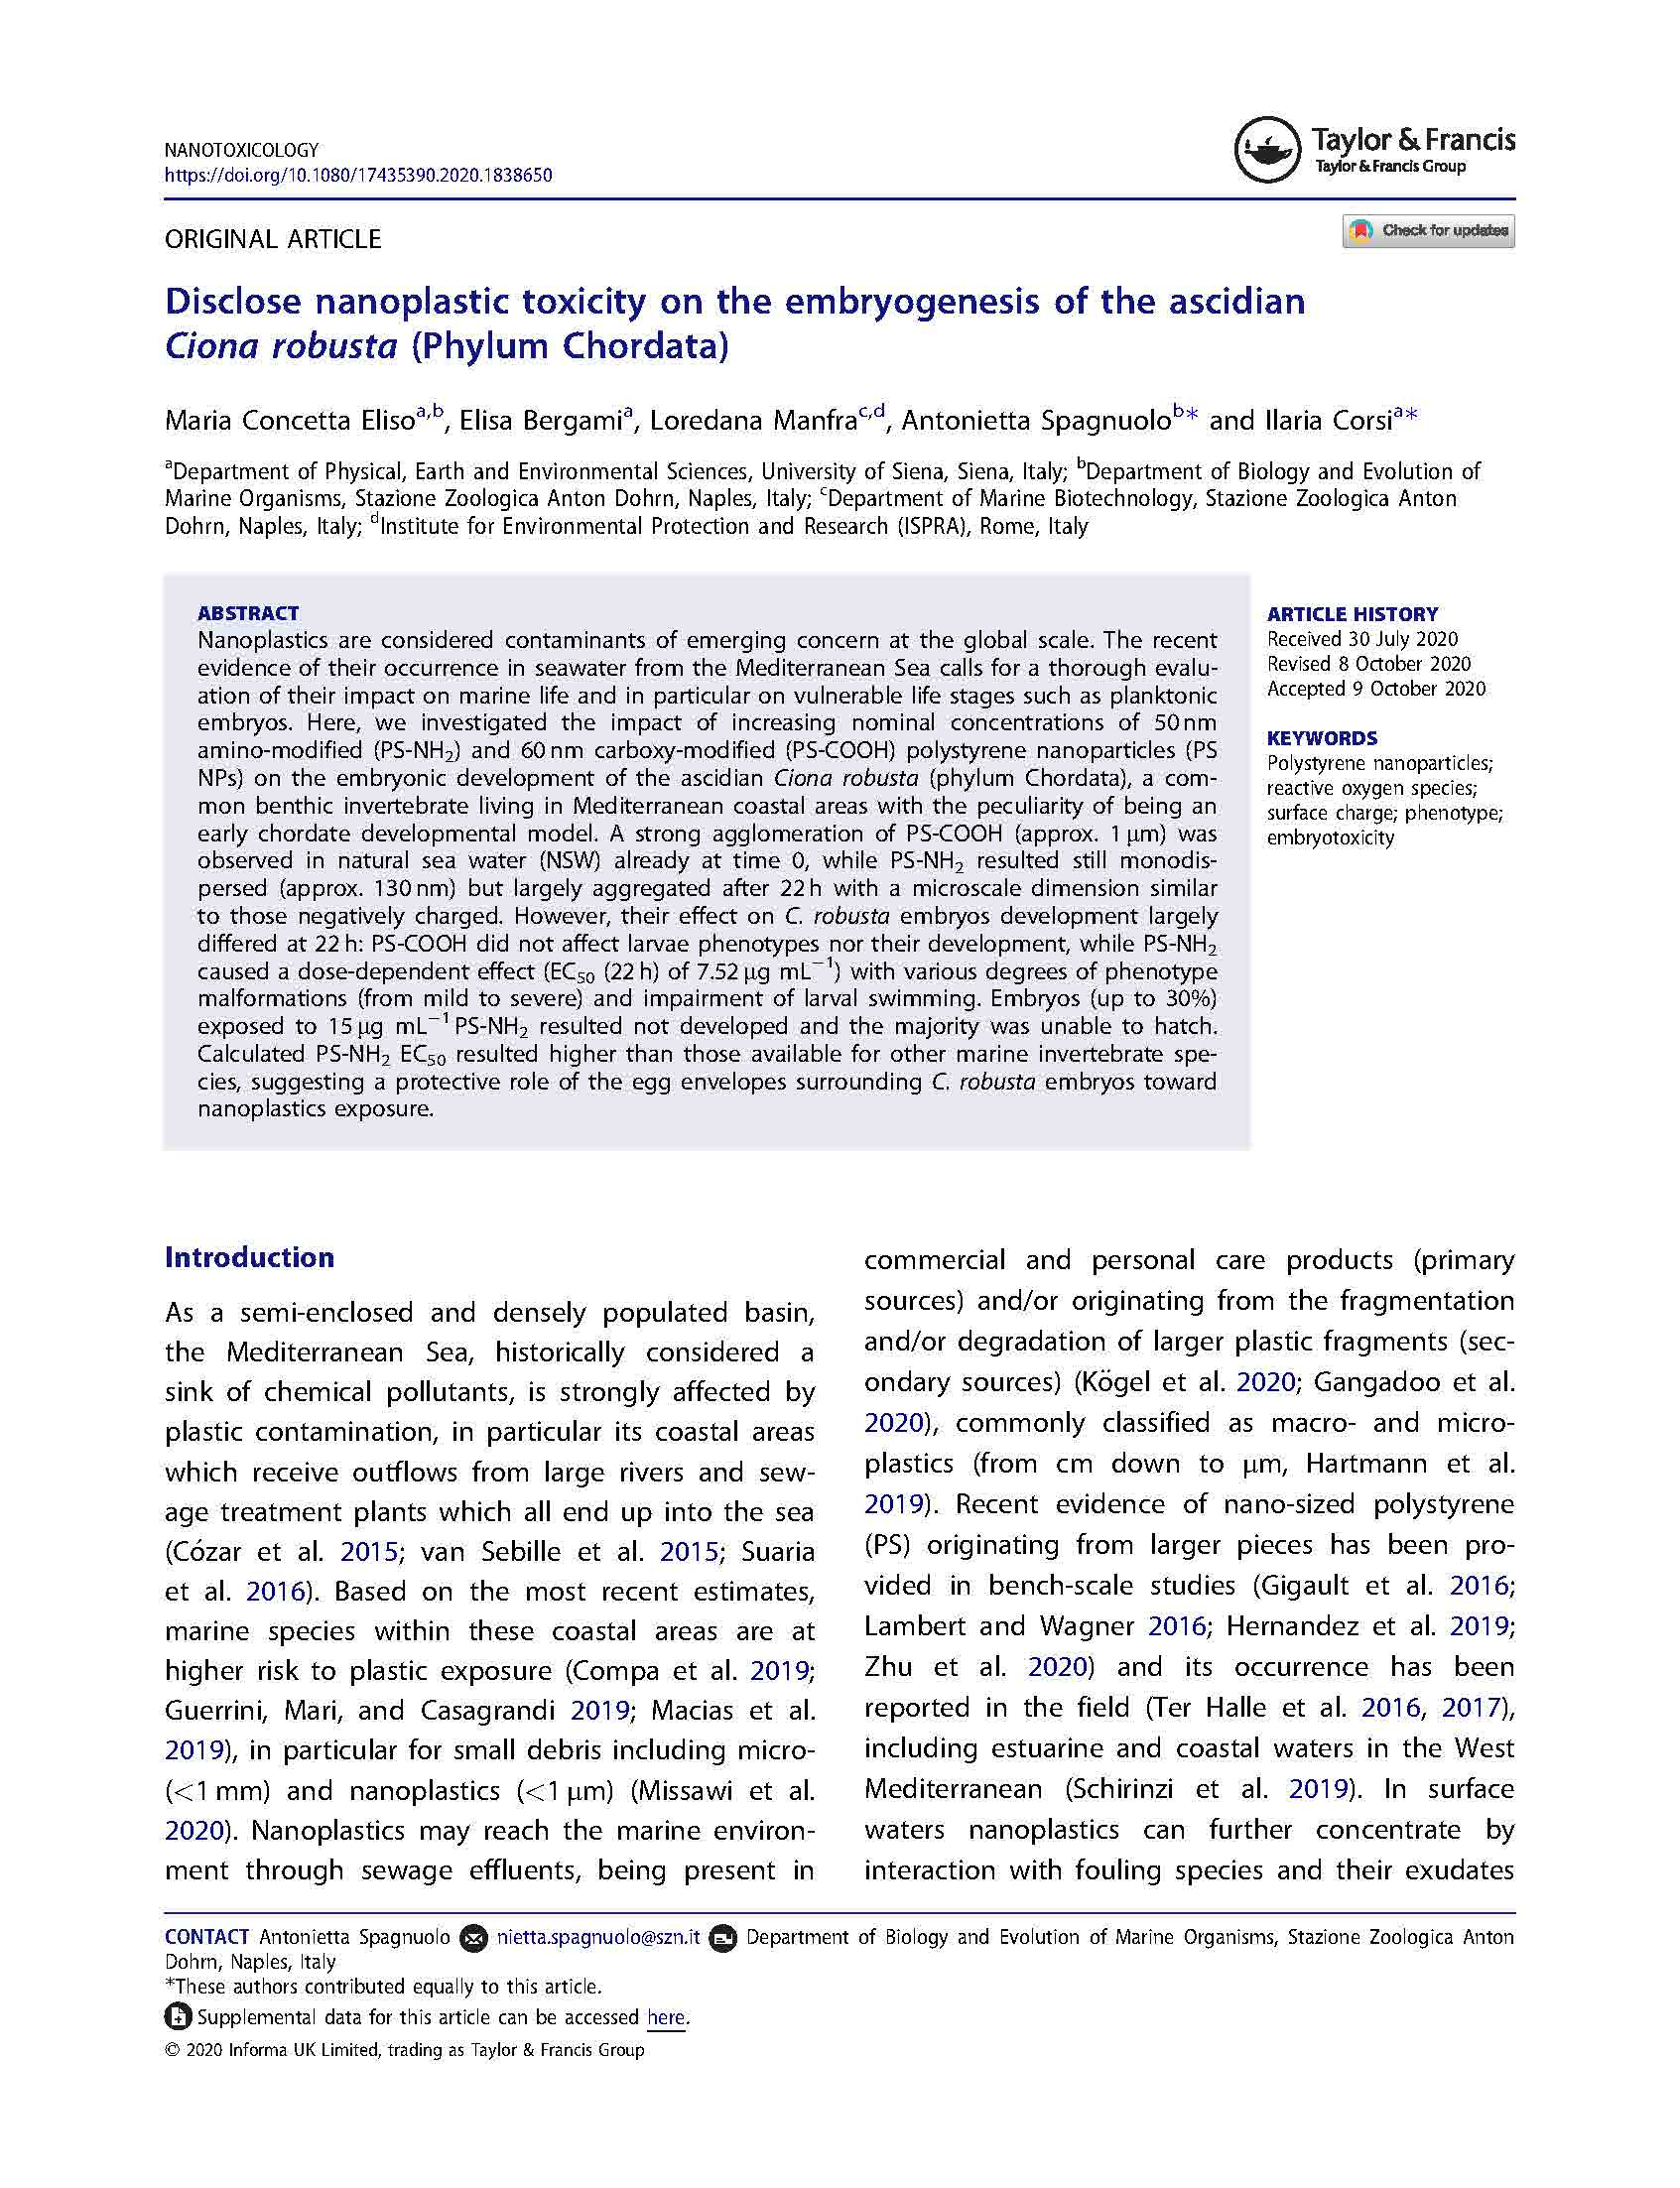 Disclose nanoplastic toxicity on the embryogenesis of the ascidian Ciona robusta Phylum Chordata